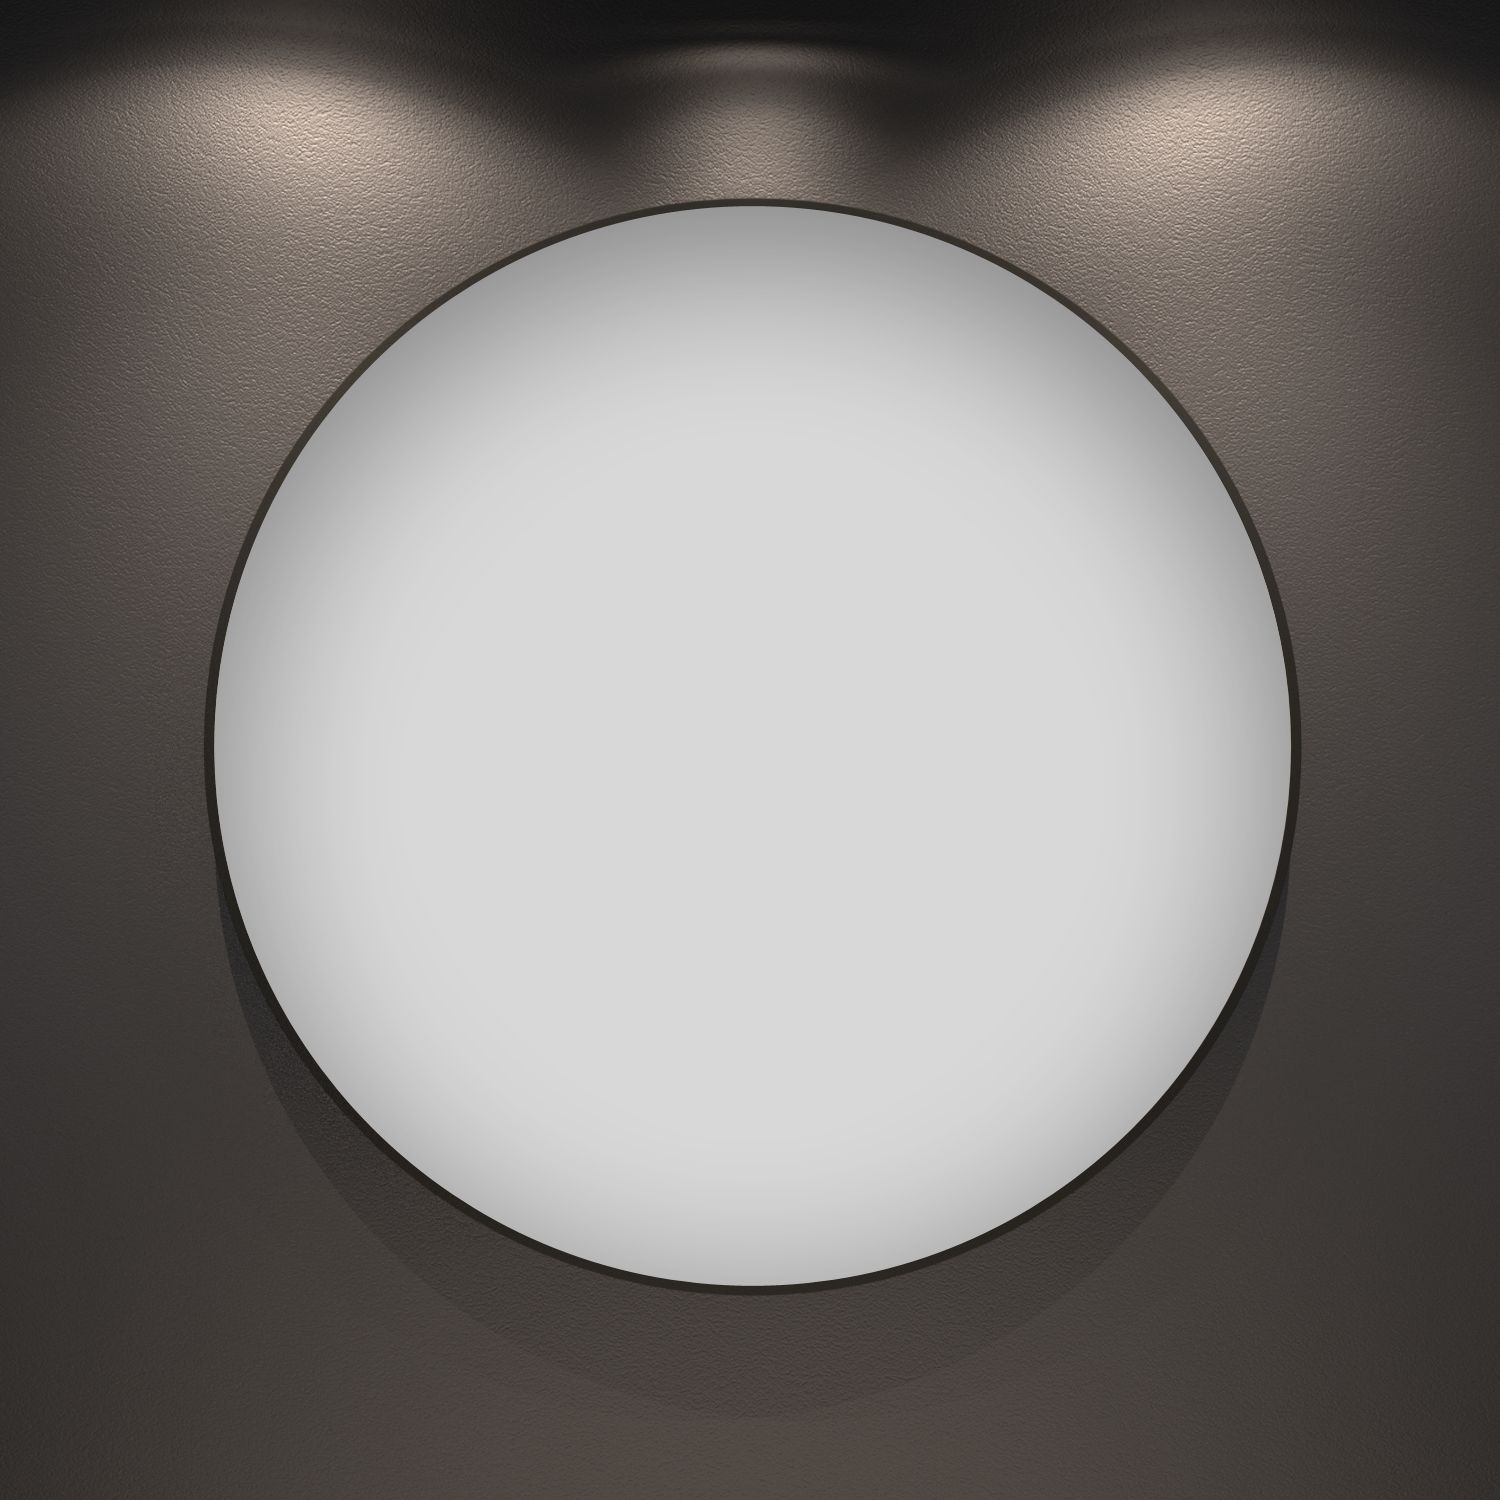 фото Влагостойкое круглое зеркало wellsee 7 rays' spectrum 172201760, диаметр 95 см